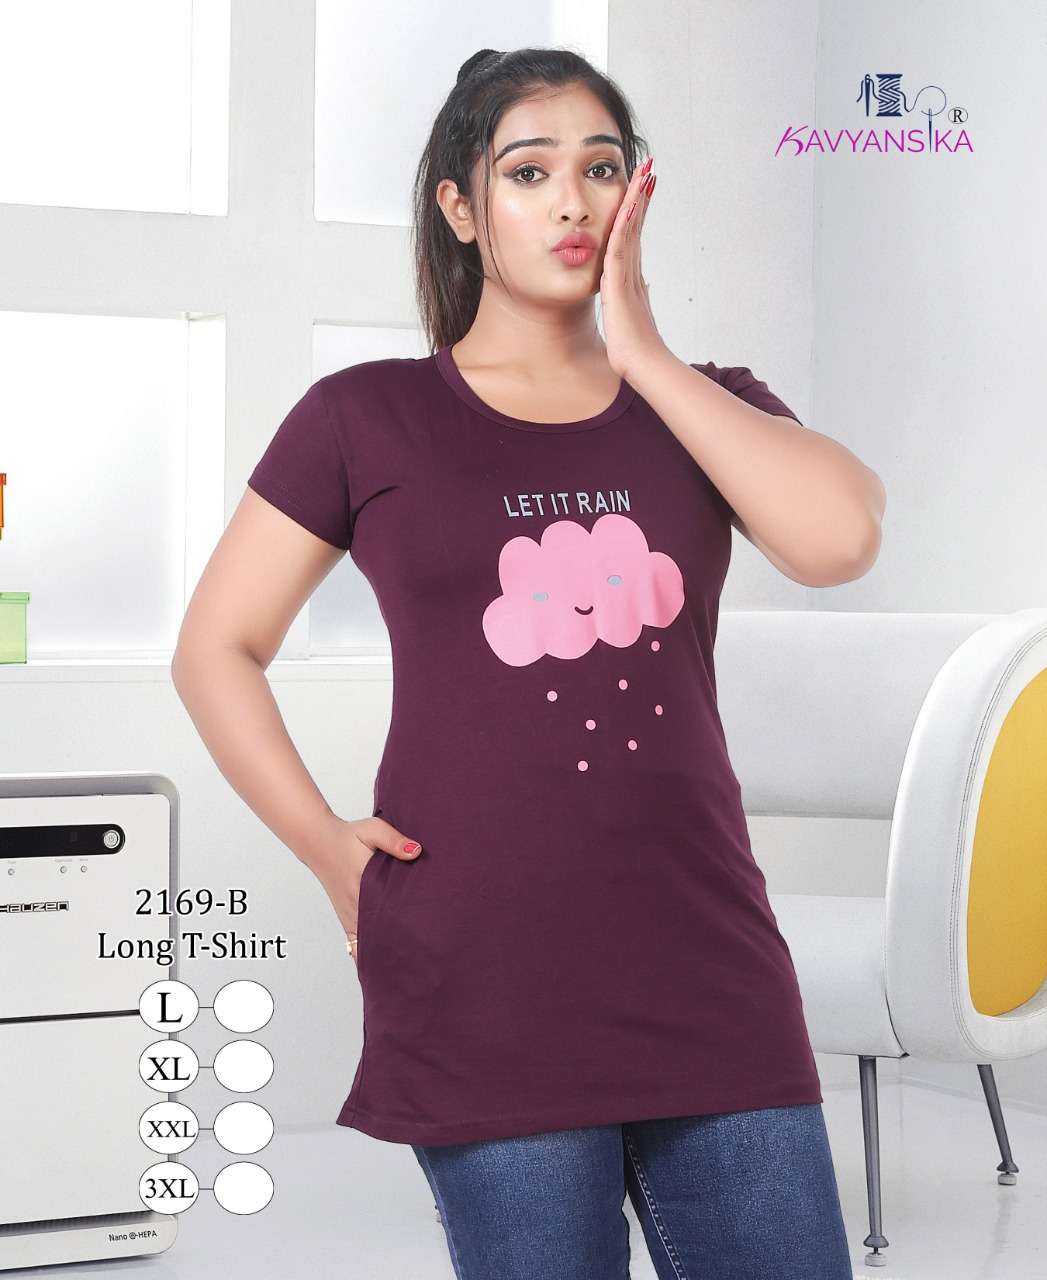 Kavyansika Pocket Long Tshirt 2169 Hosiery Cotton Girls T Shirt